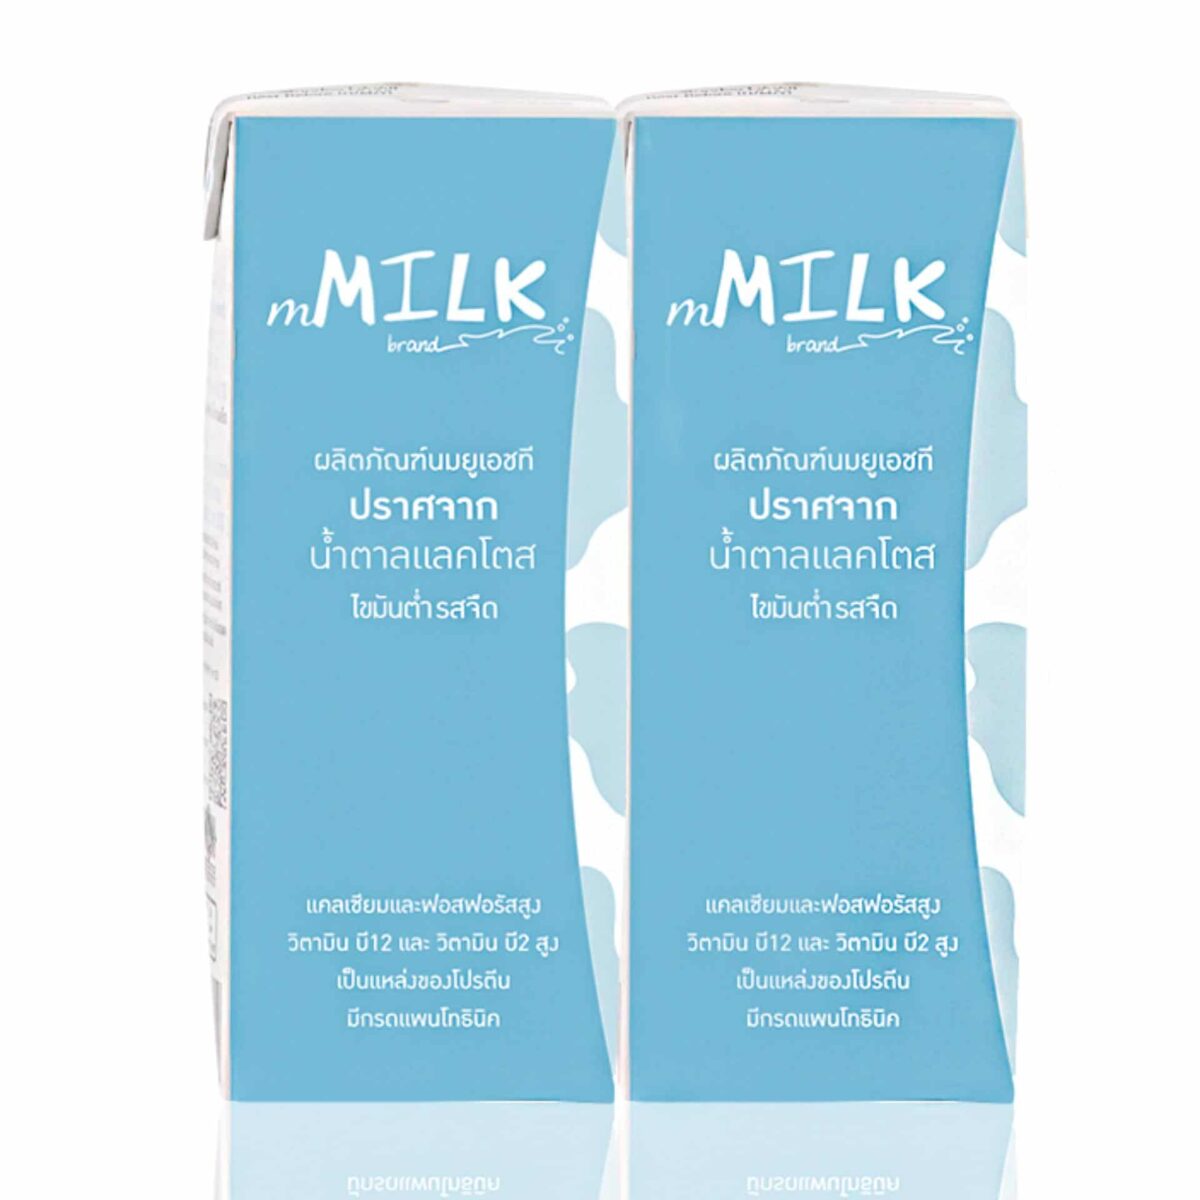 mMilk UHT Milk Lactose Free Low Fat Plain 180ml.×2 เอ็มมิลค์ นมยูเอชทีปราศจากน้ำตาลแลคโตสไขมันต่ำรสจืด 180มล.×2 1 1